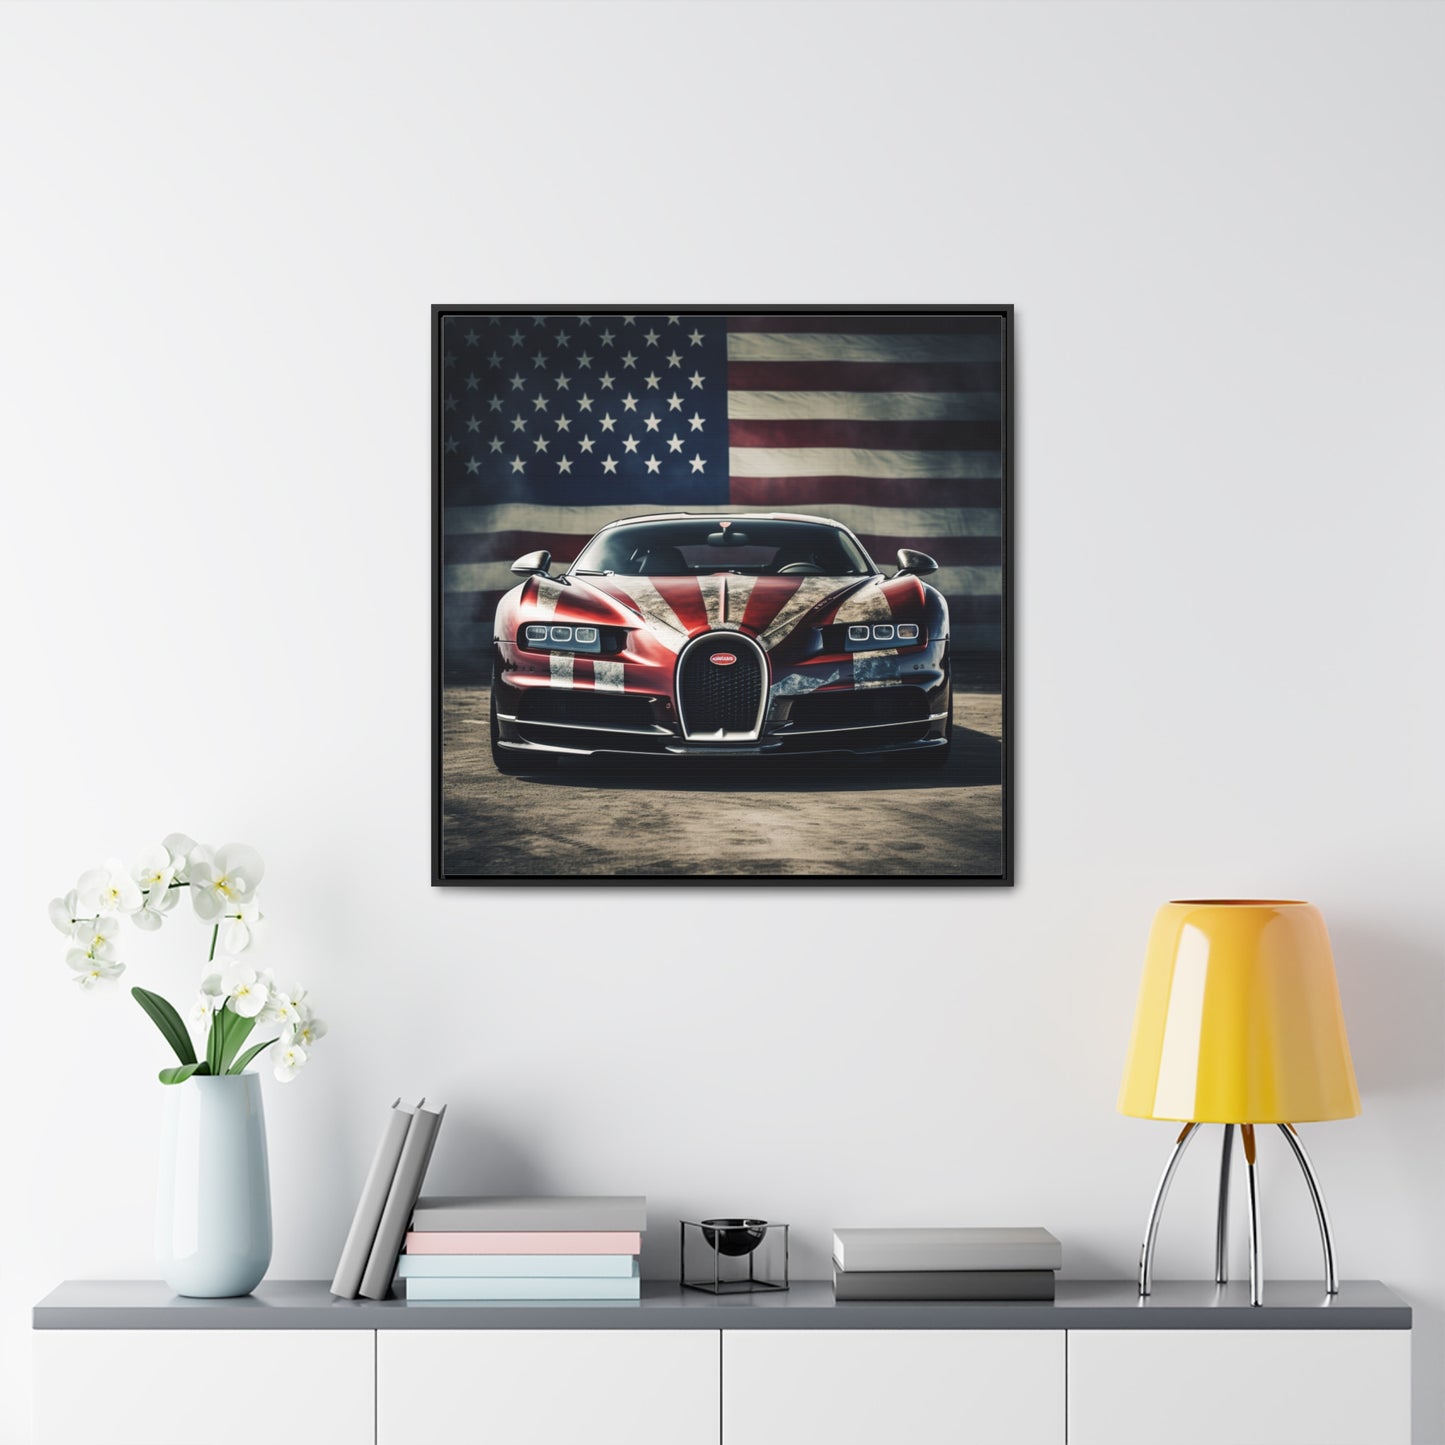 Gallery Canvas Wraps, Square Frame American Flag Background Bugatti 3